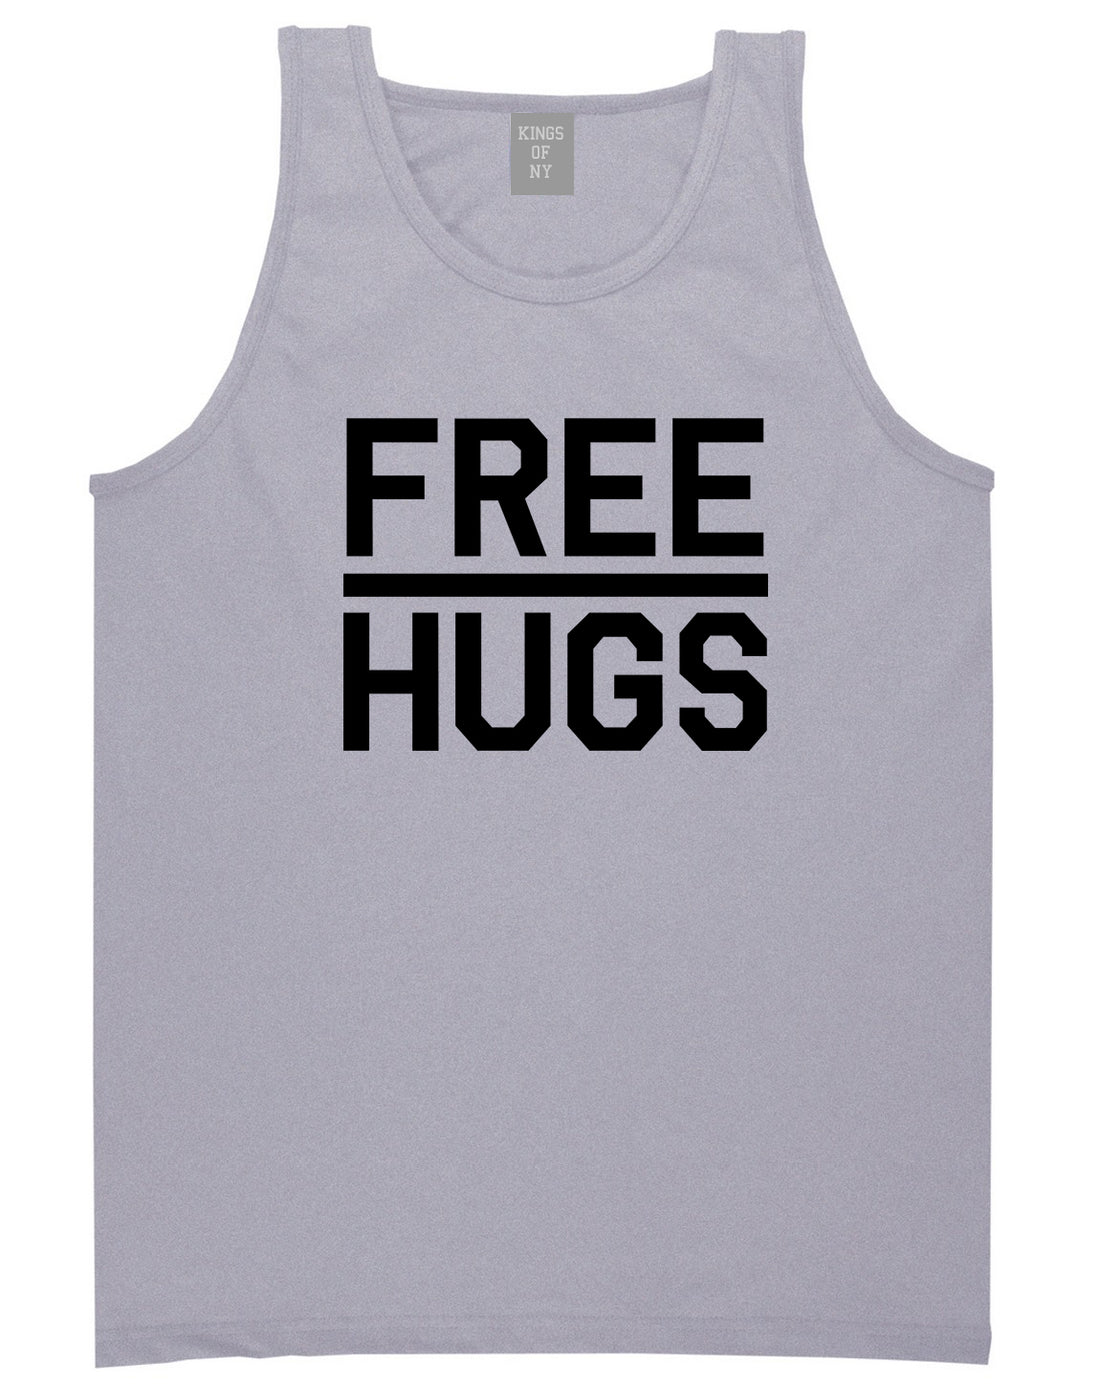 Free Hugs Funny Mens Grey Tank Top Shirt by KINGS OF NY